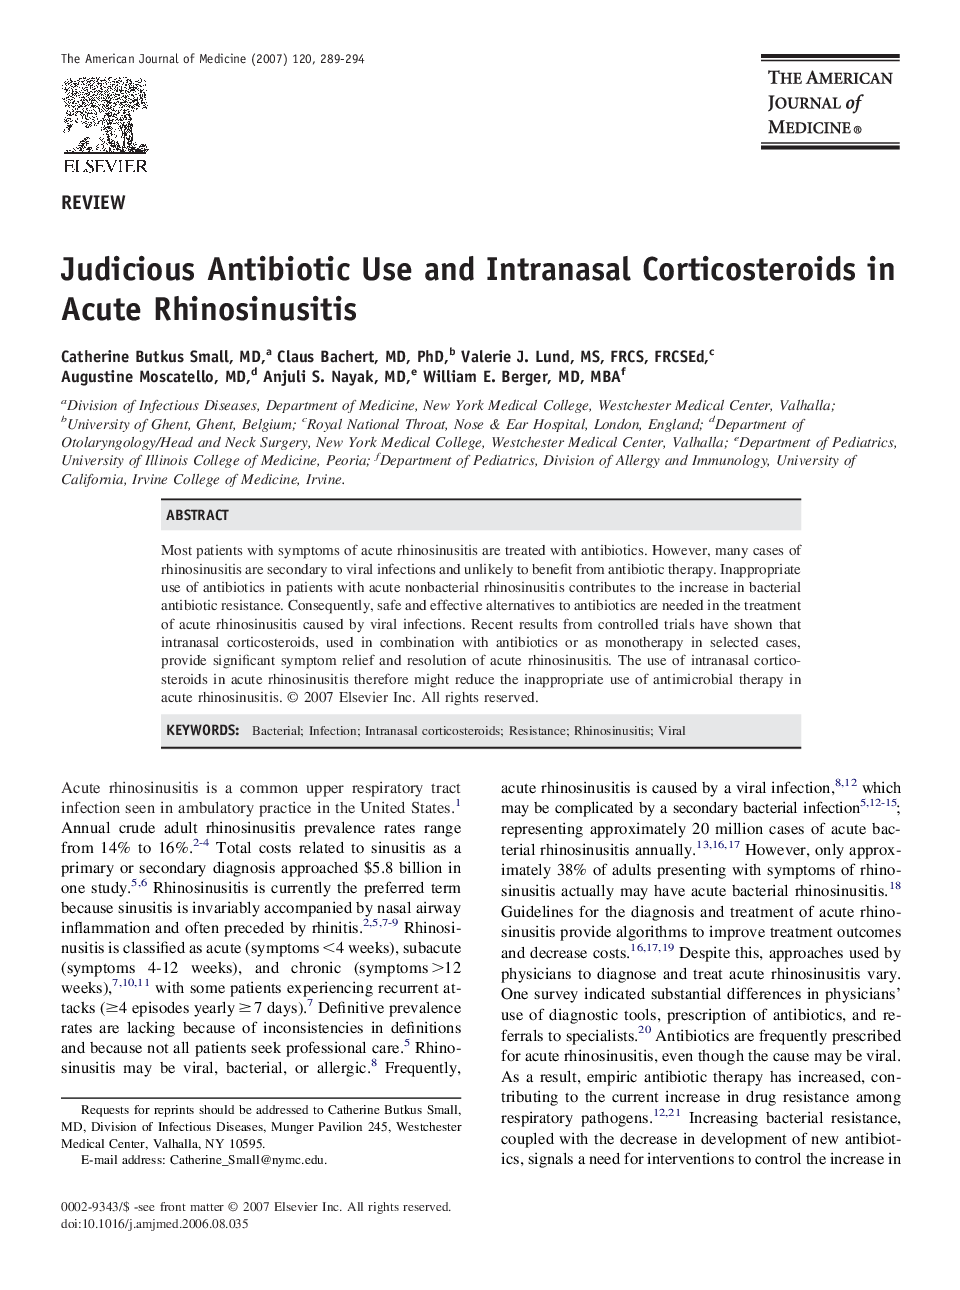 Judicious Antibiotic Use and Intranasal Corticosteroids in Acute Rhinosinusitis